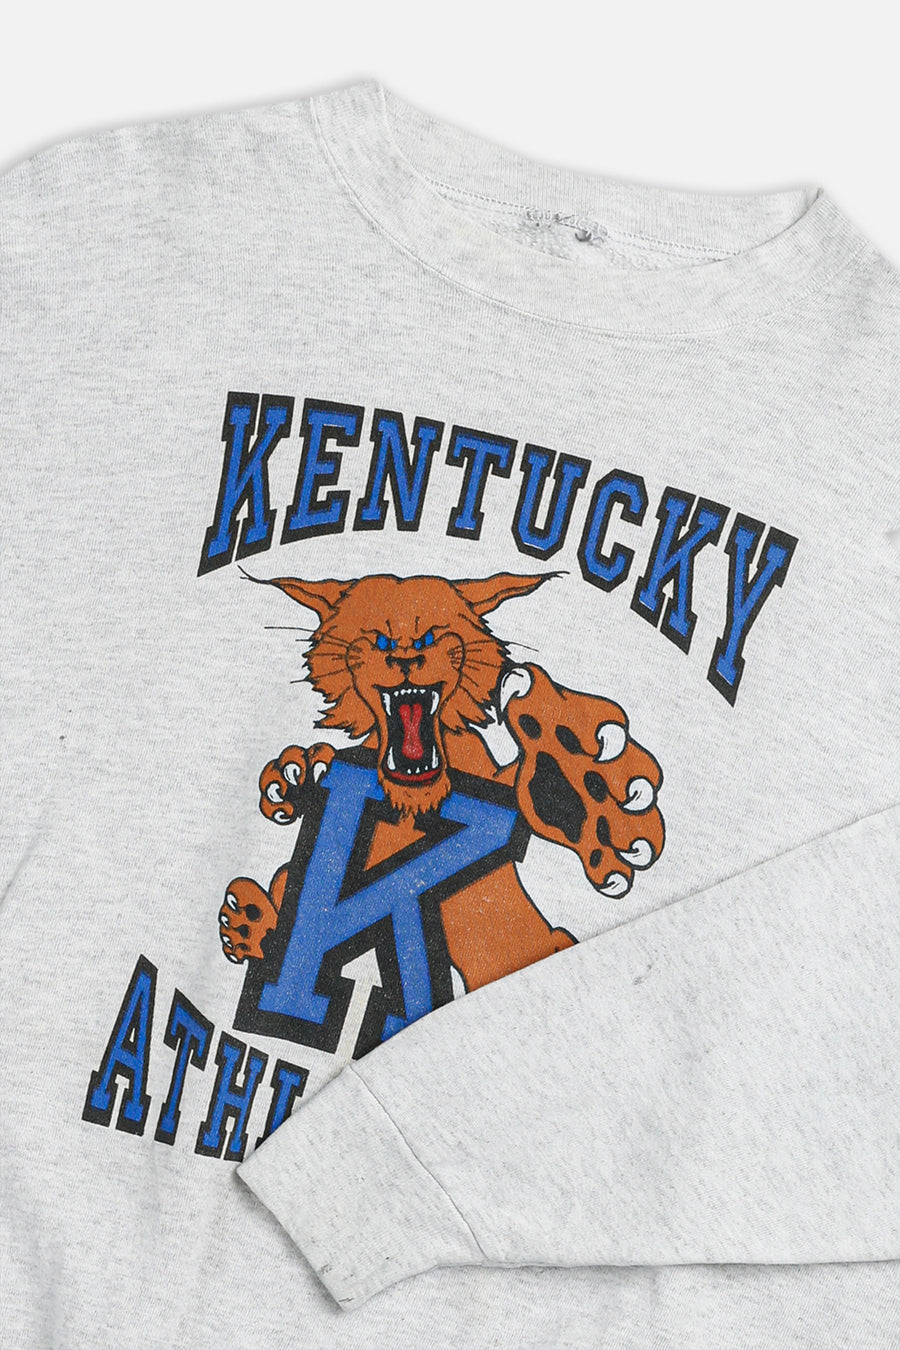 Vintage Kentucky Athletics Sweatshirt - M